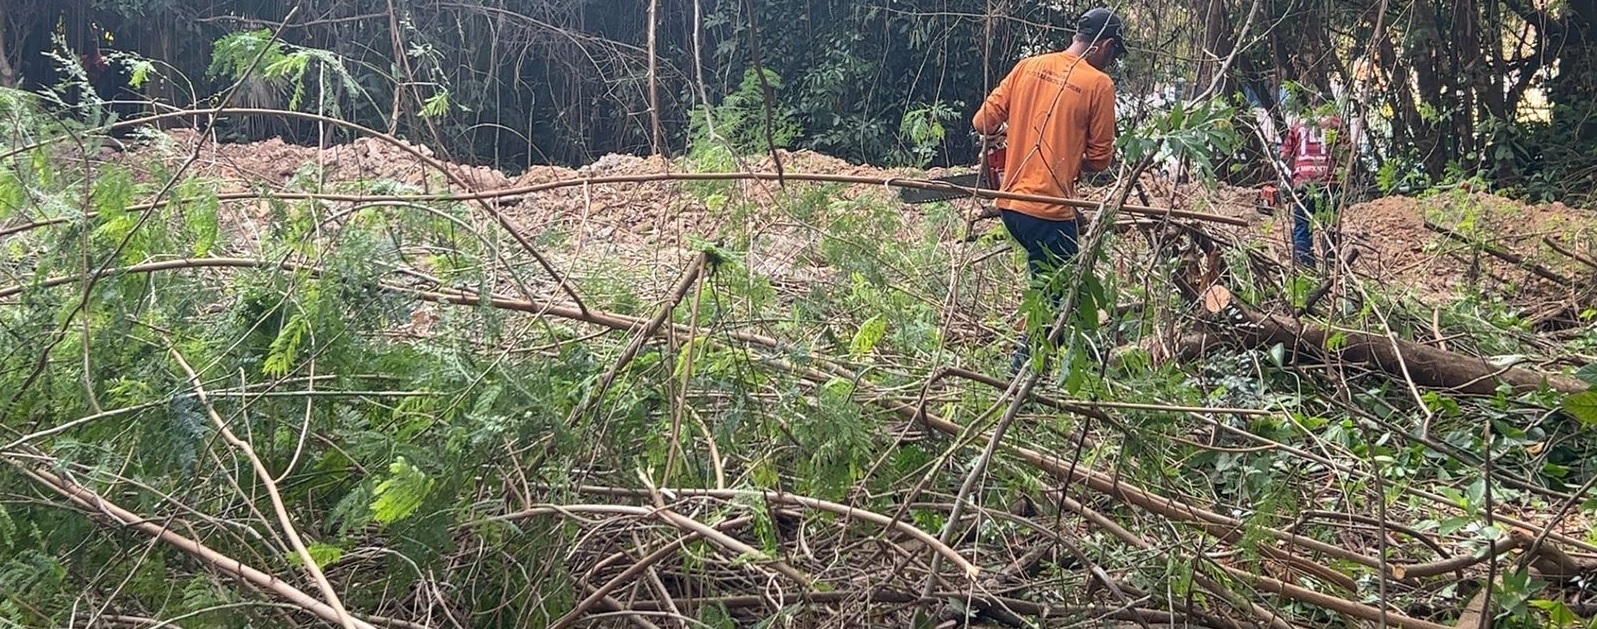 Secretaria de Meio Ambiente realiza o Manejo Sustentável de Árvores Invasoras no Zoobosque Municipal